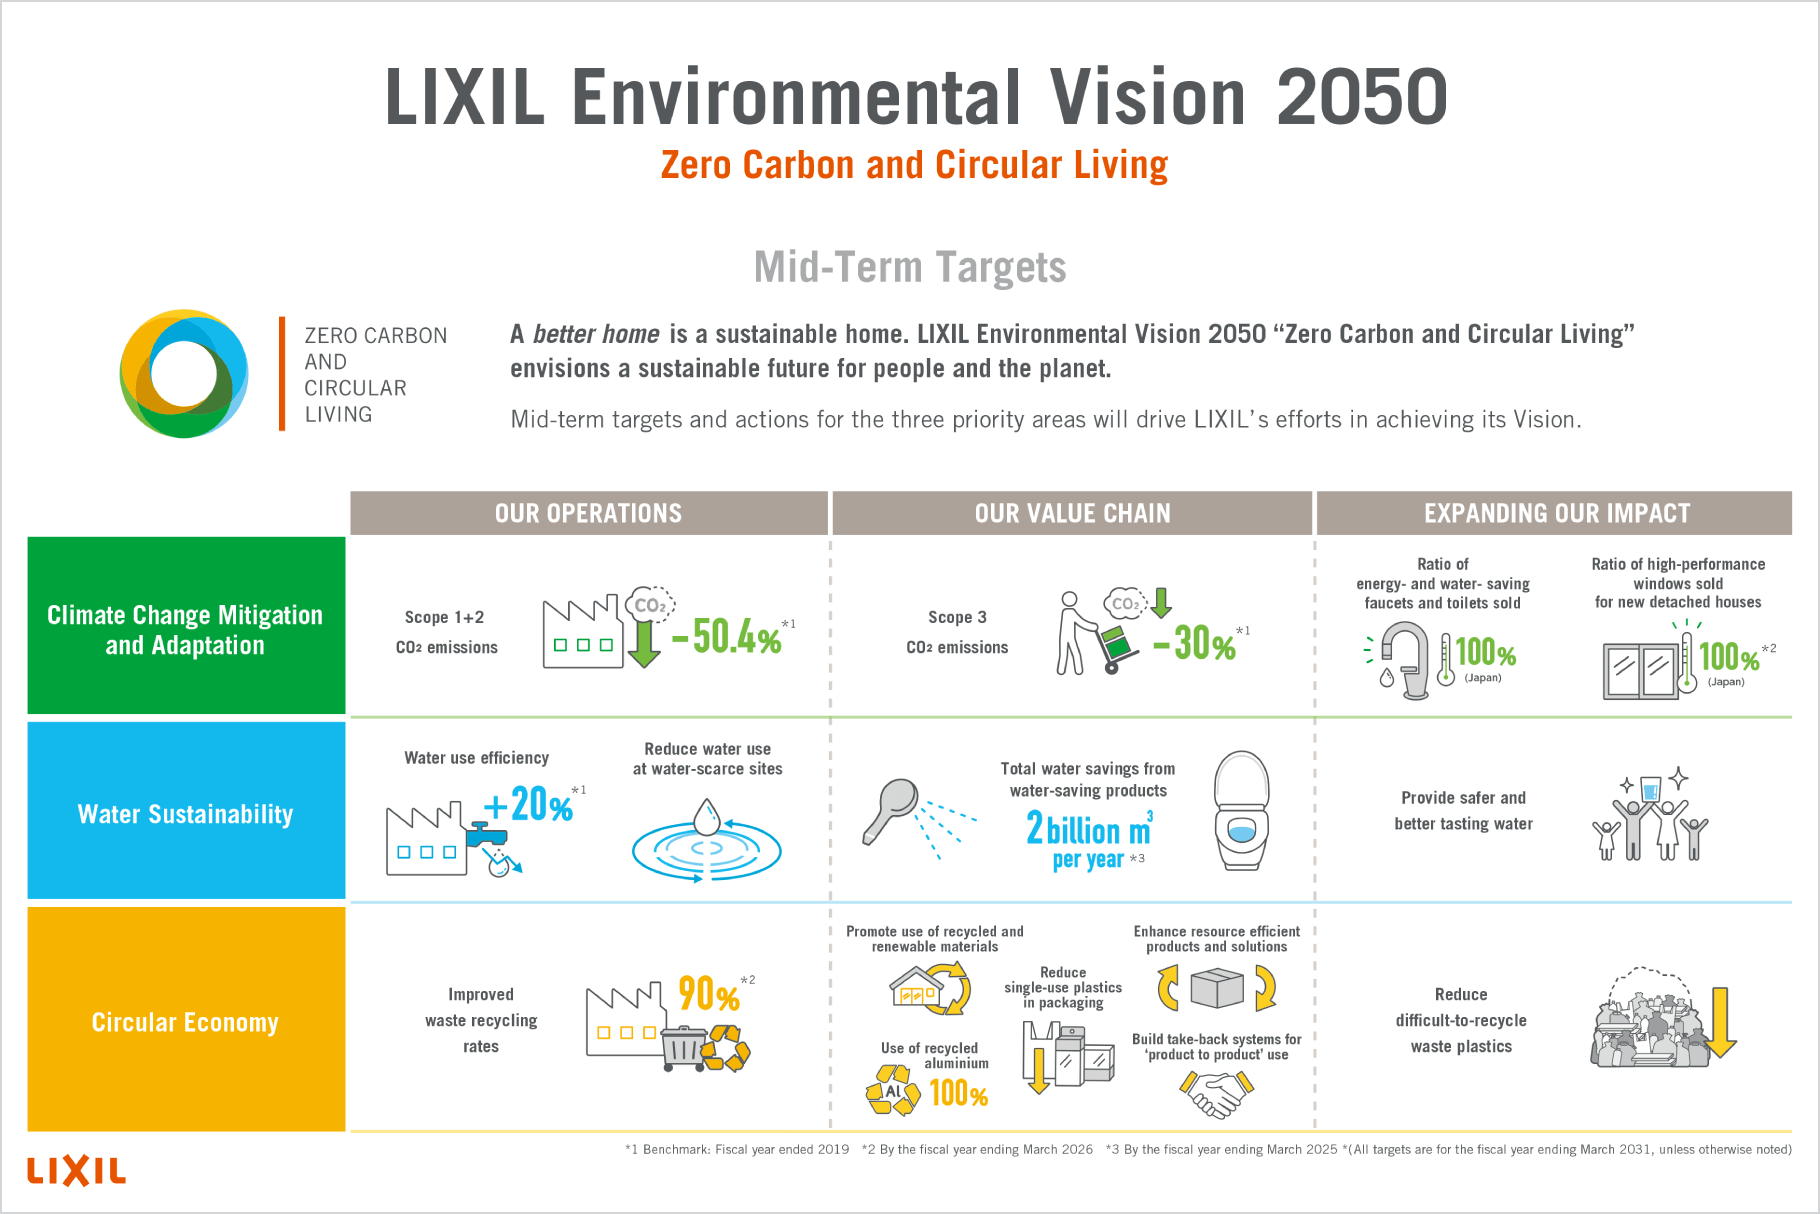 LIXIL Environmental Vision 2050 and Medium-Term Targets